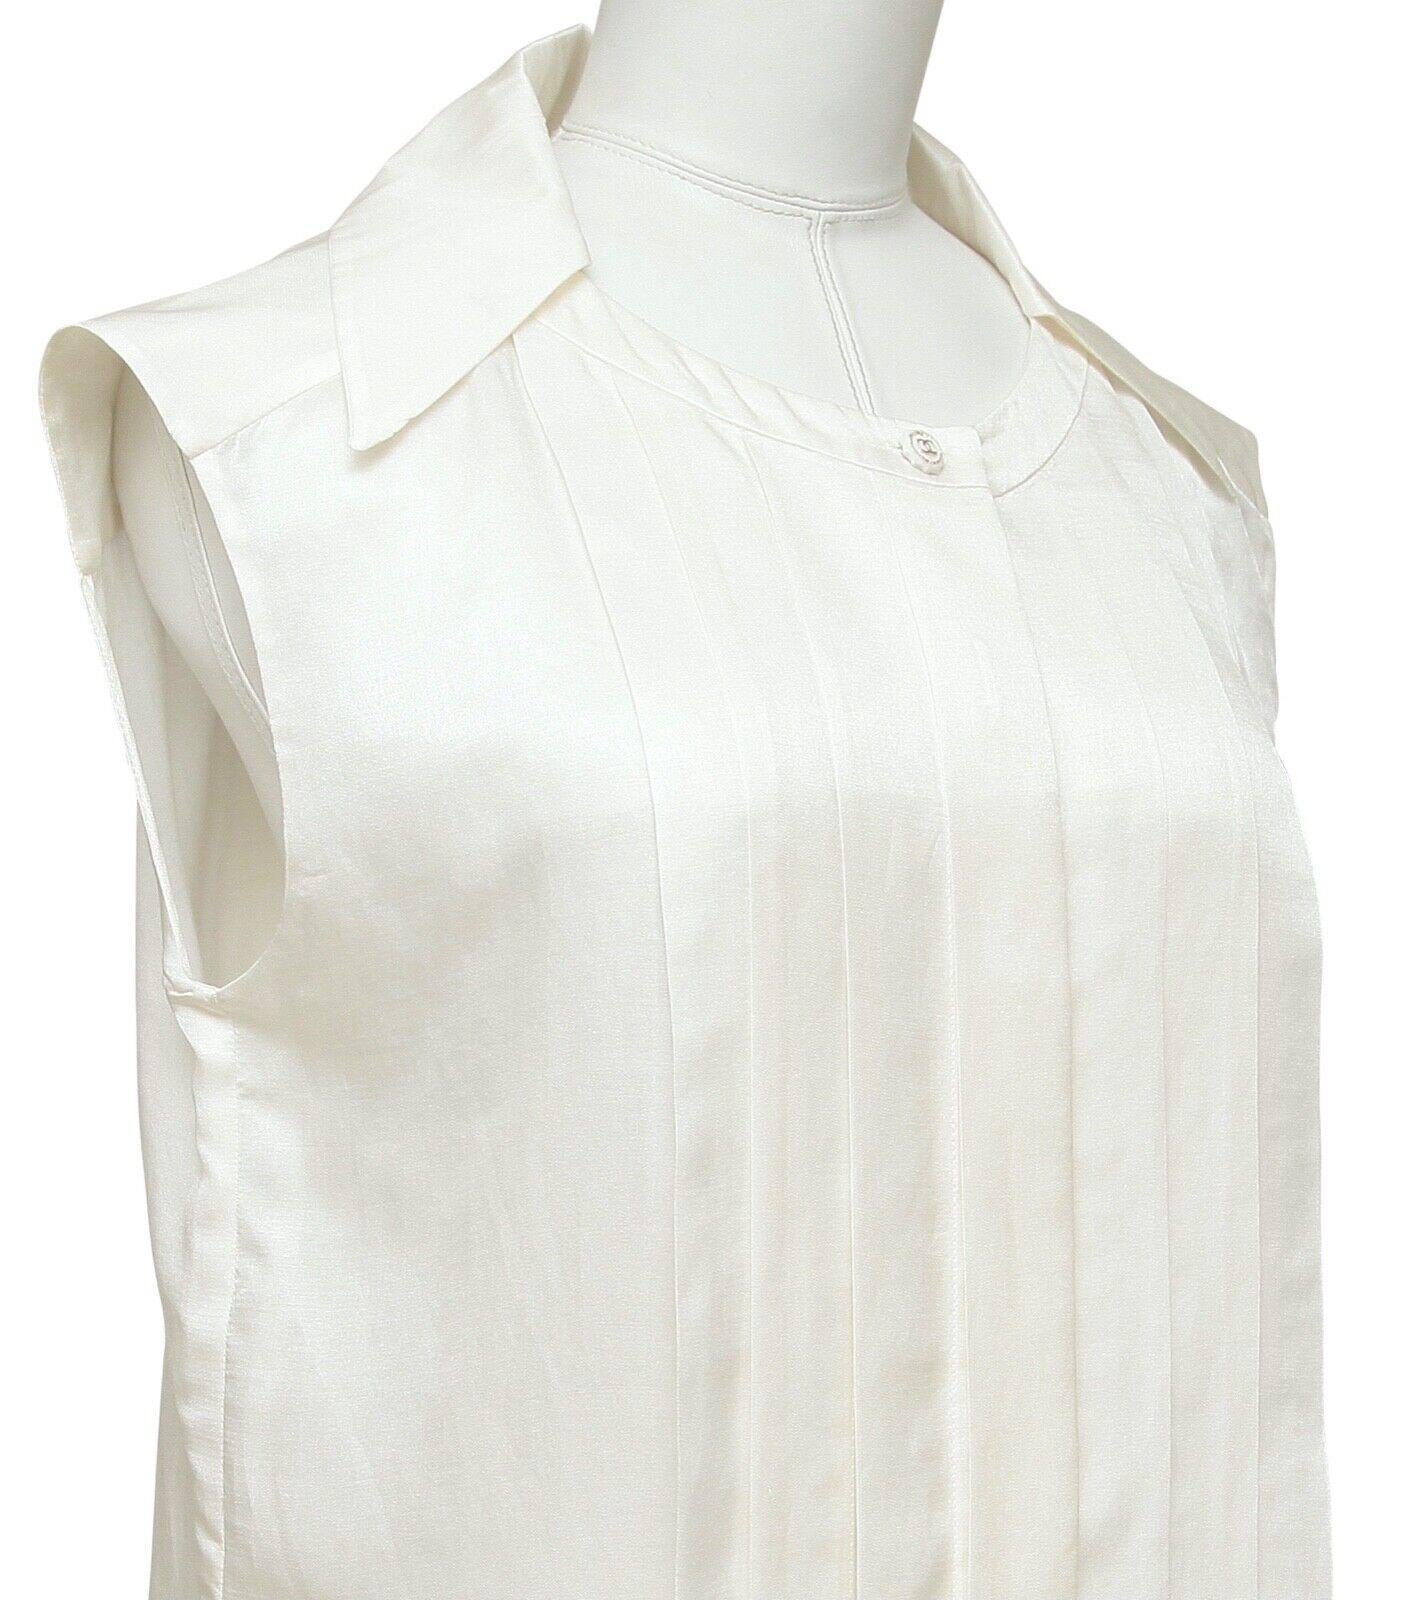 CHANEL Sleeveless Blouse Top Shirt Ivory Ecru Cotton Silk Pleats Collar Sz 44 1